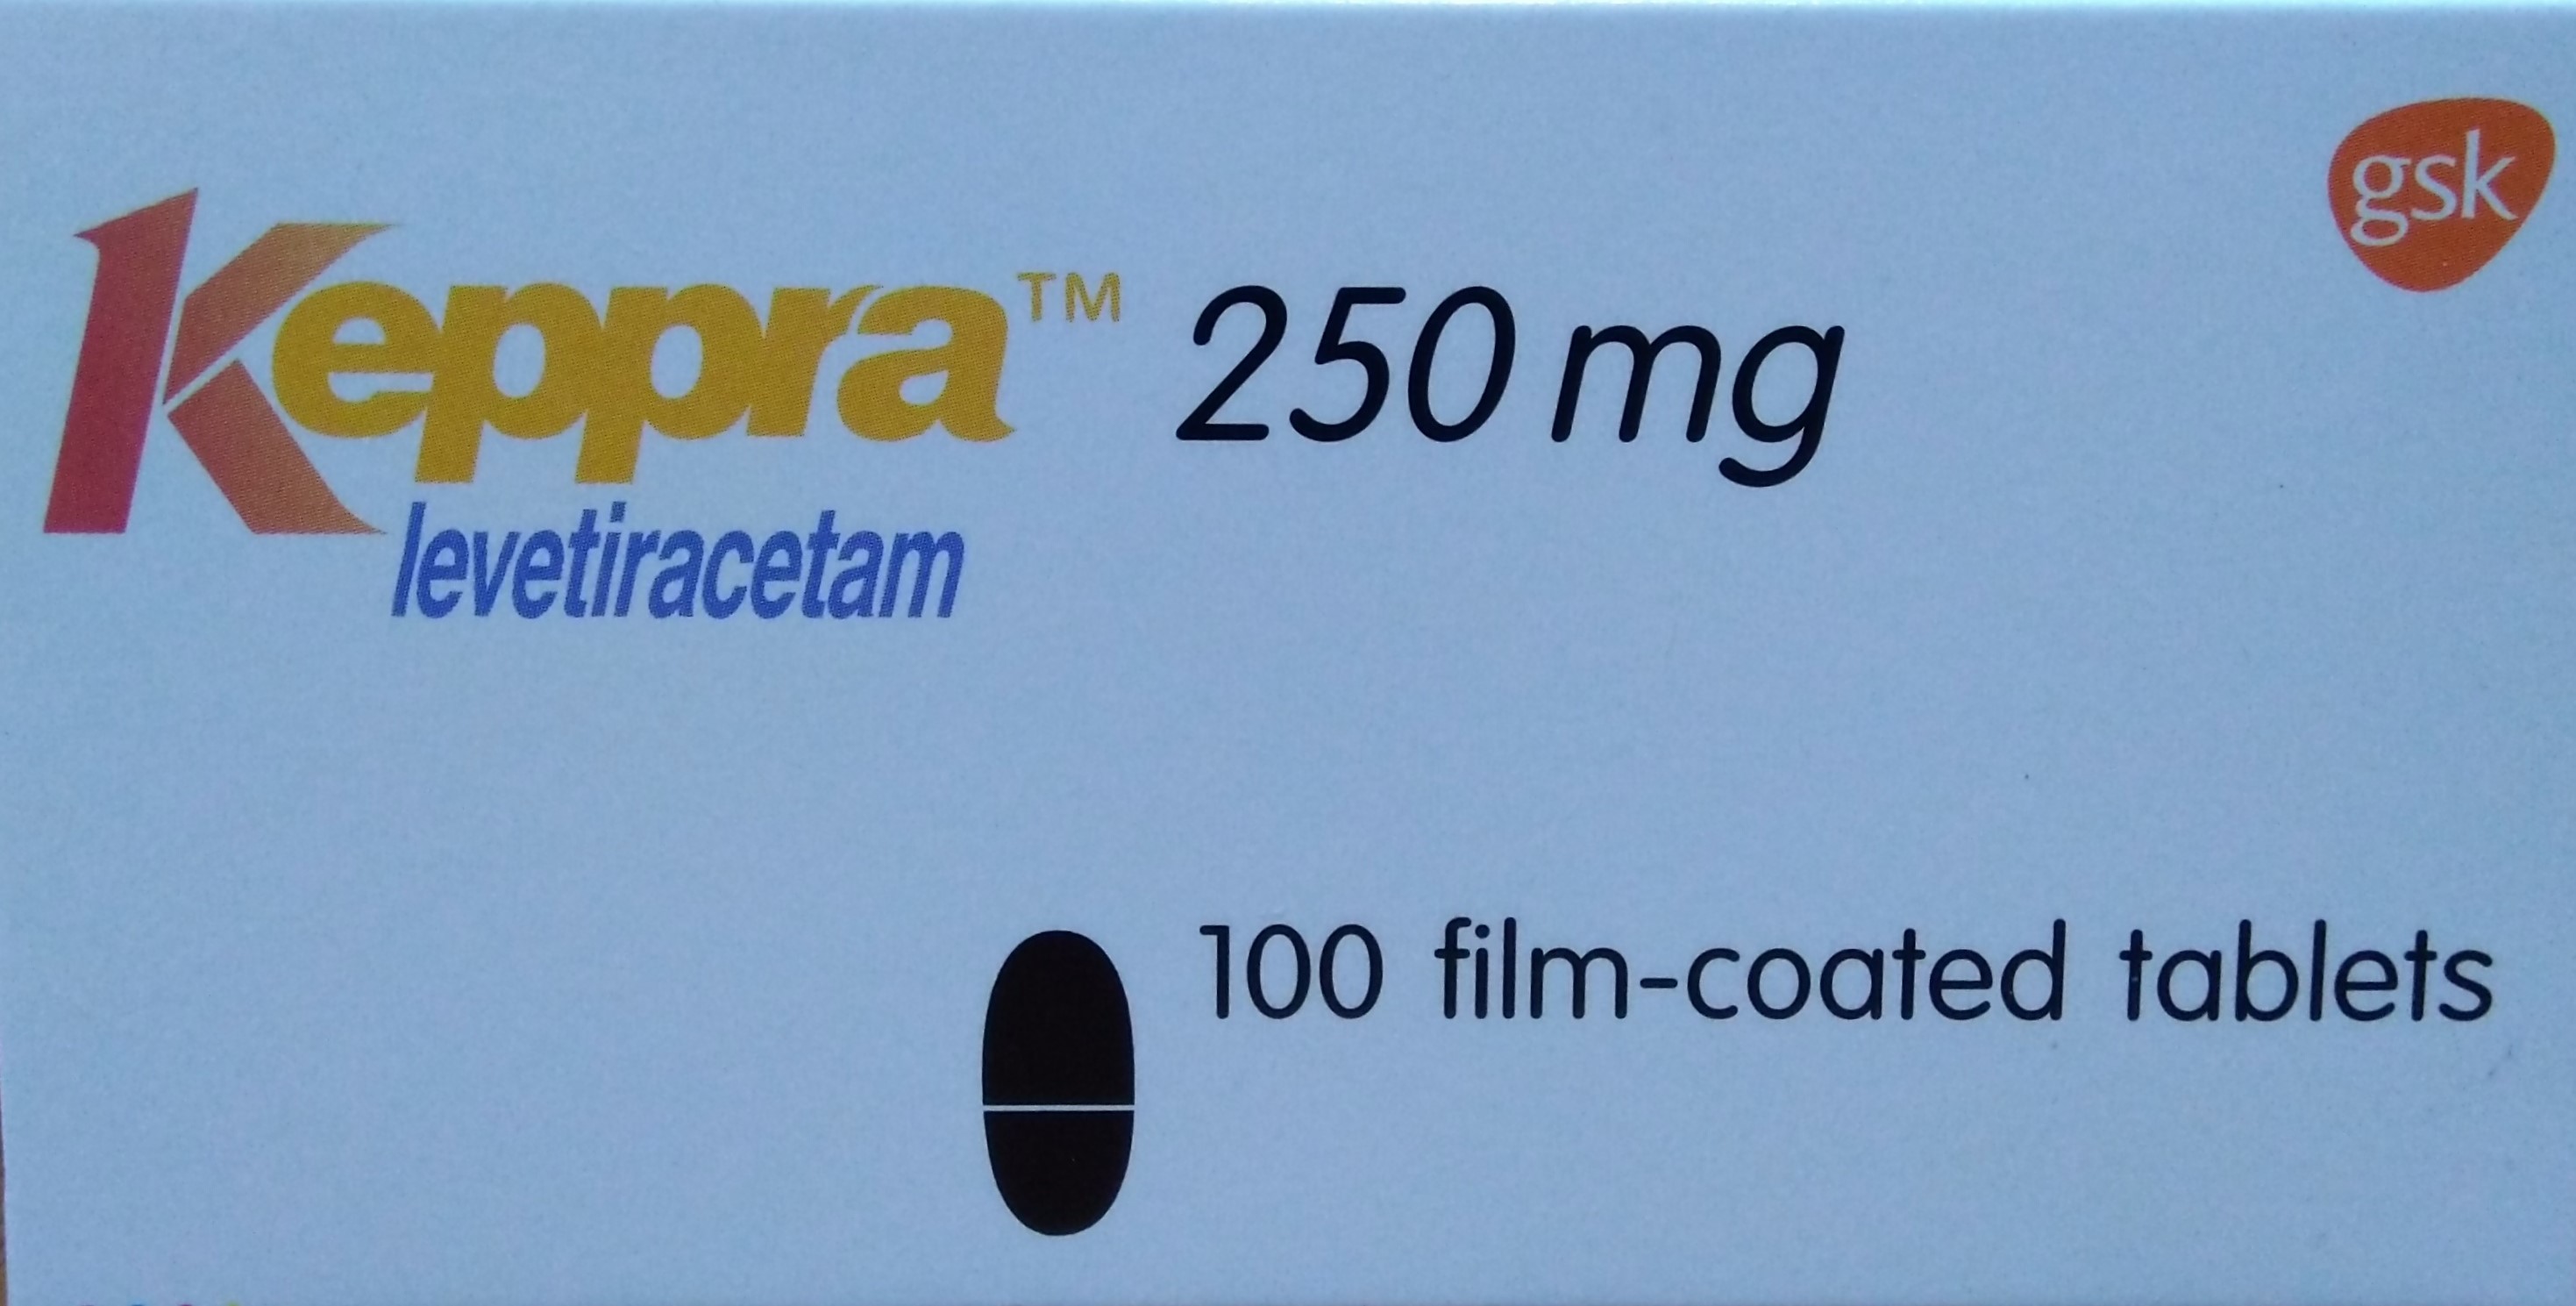 Keppra Tablets 250mg